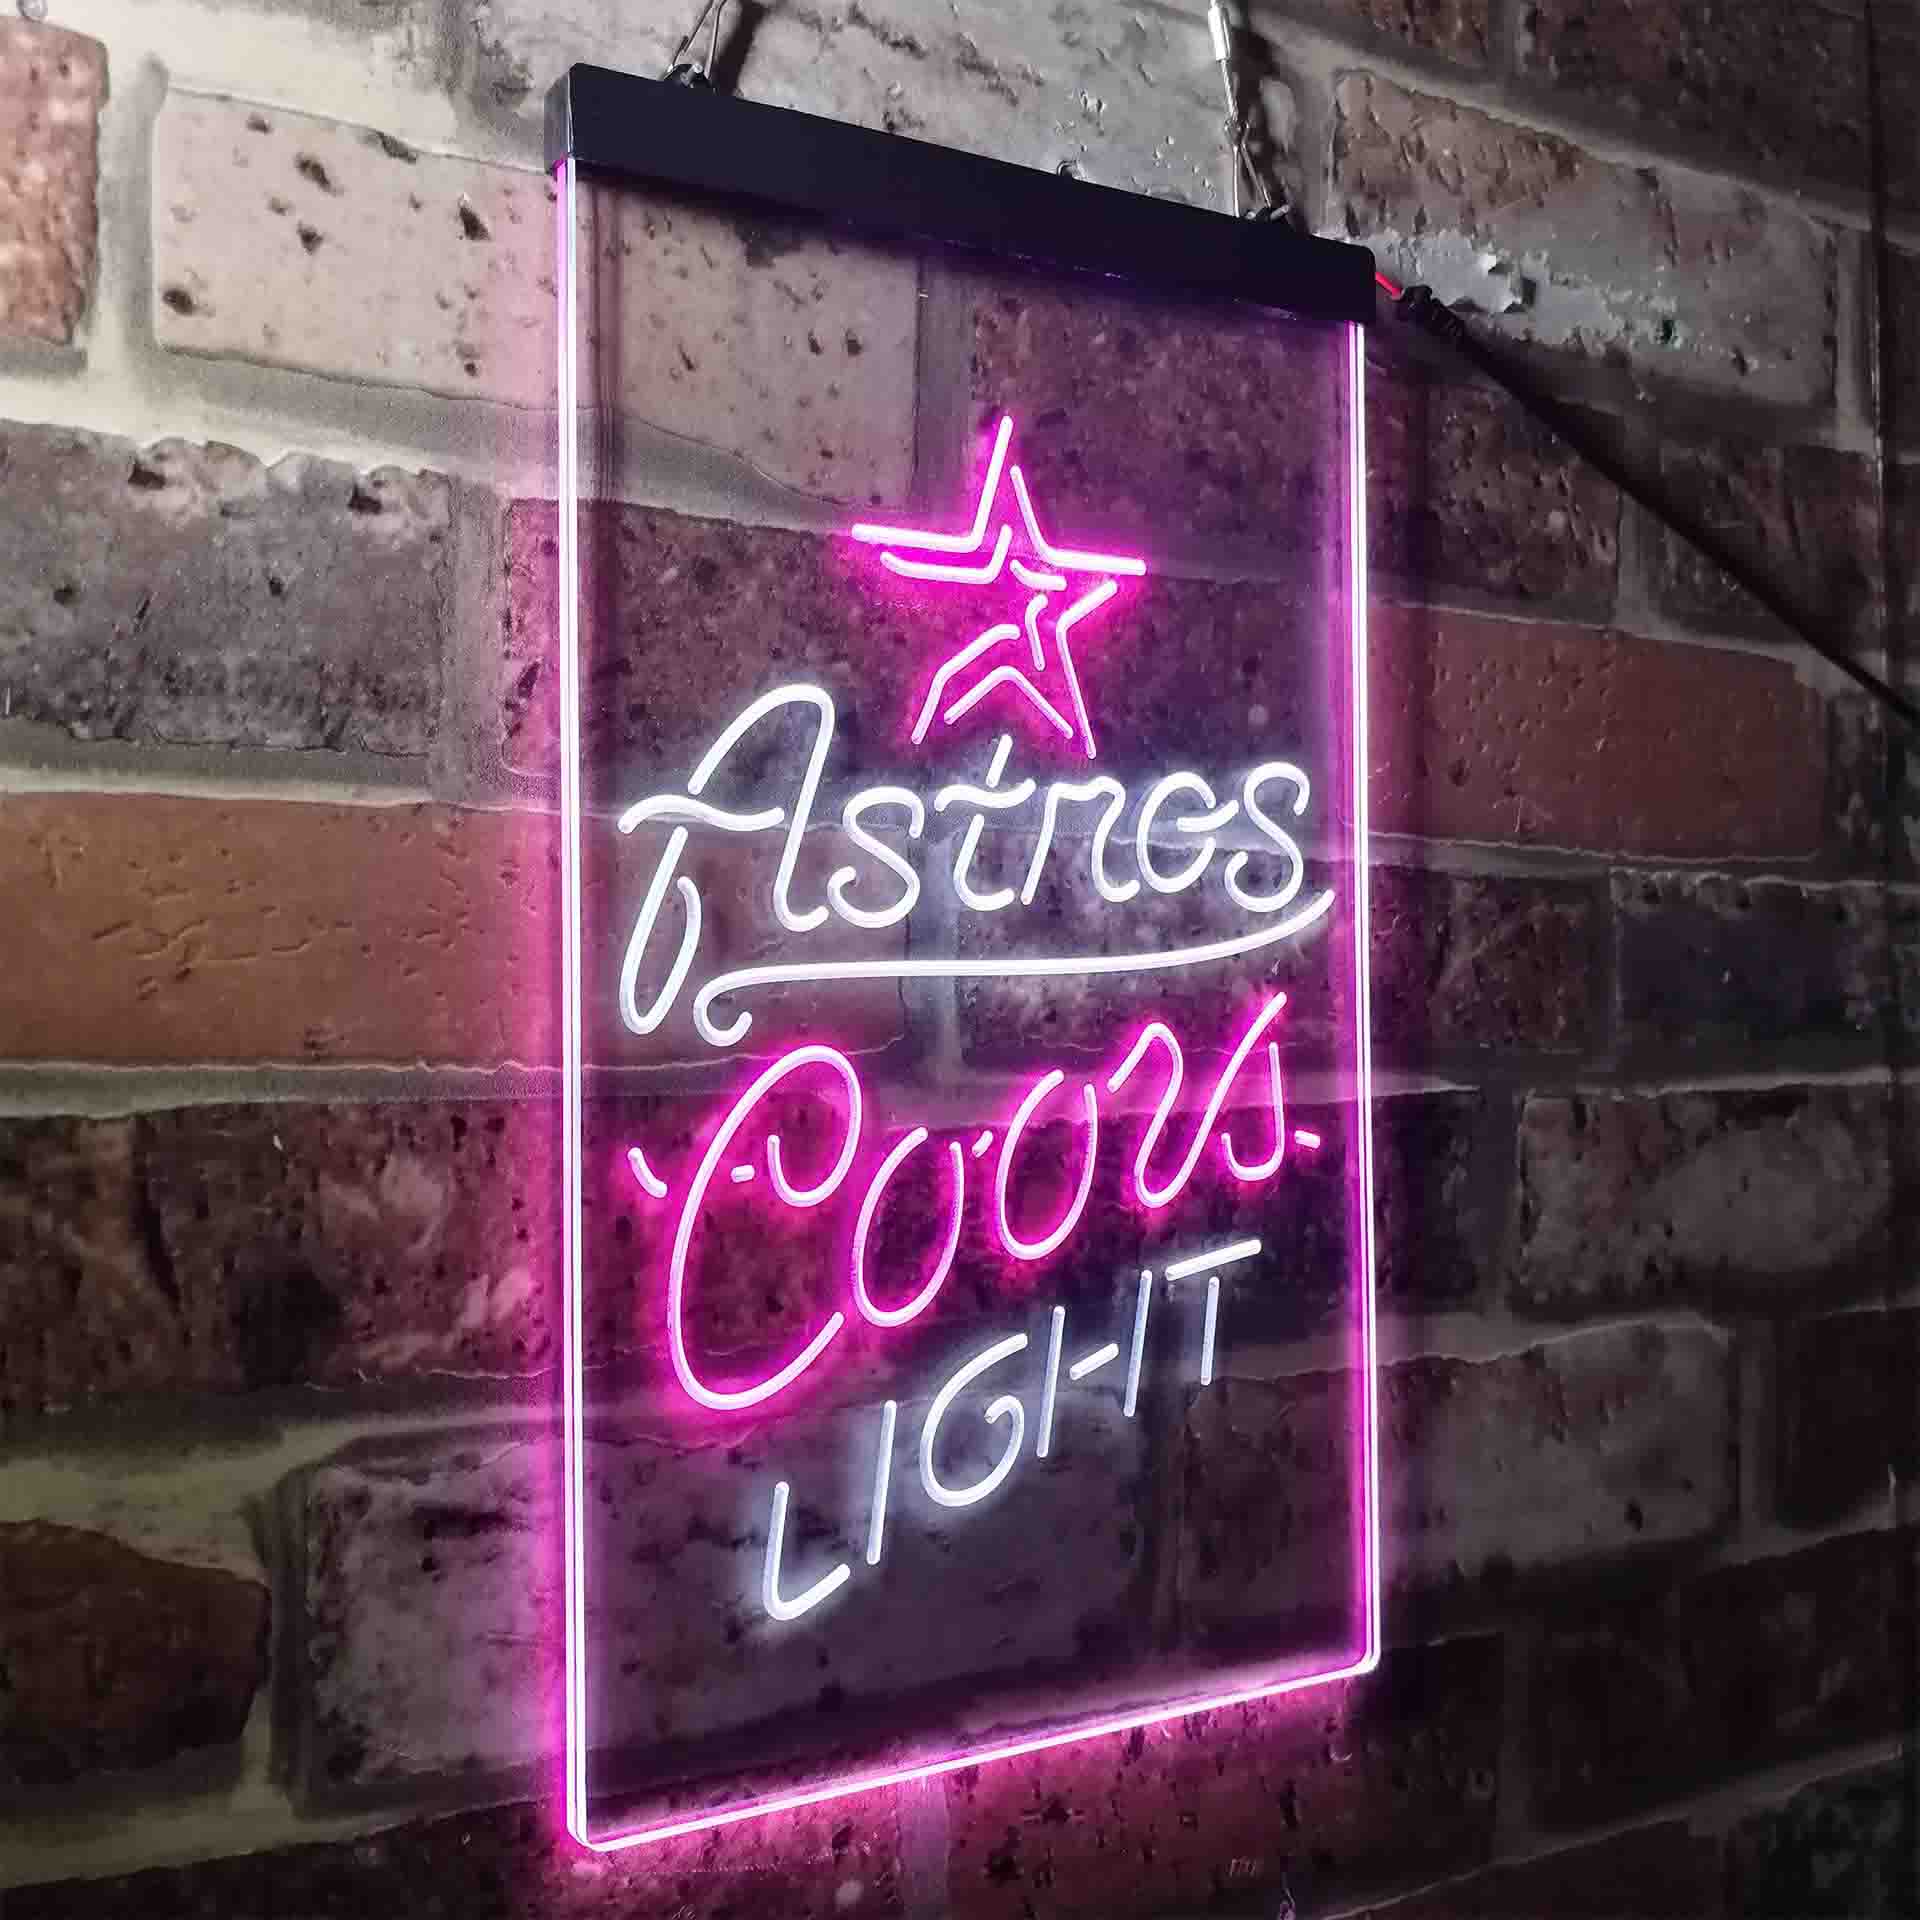 Houston Astros Coors Light LED Neon Sign